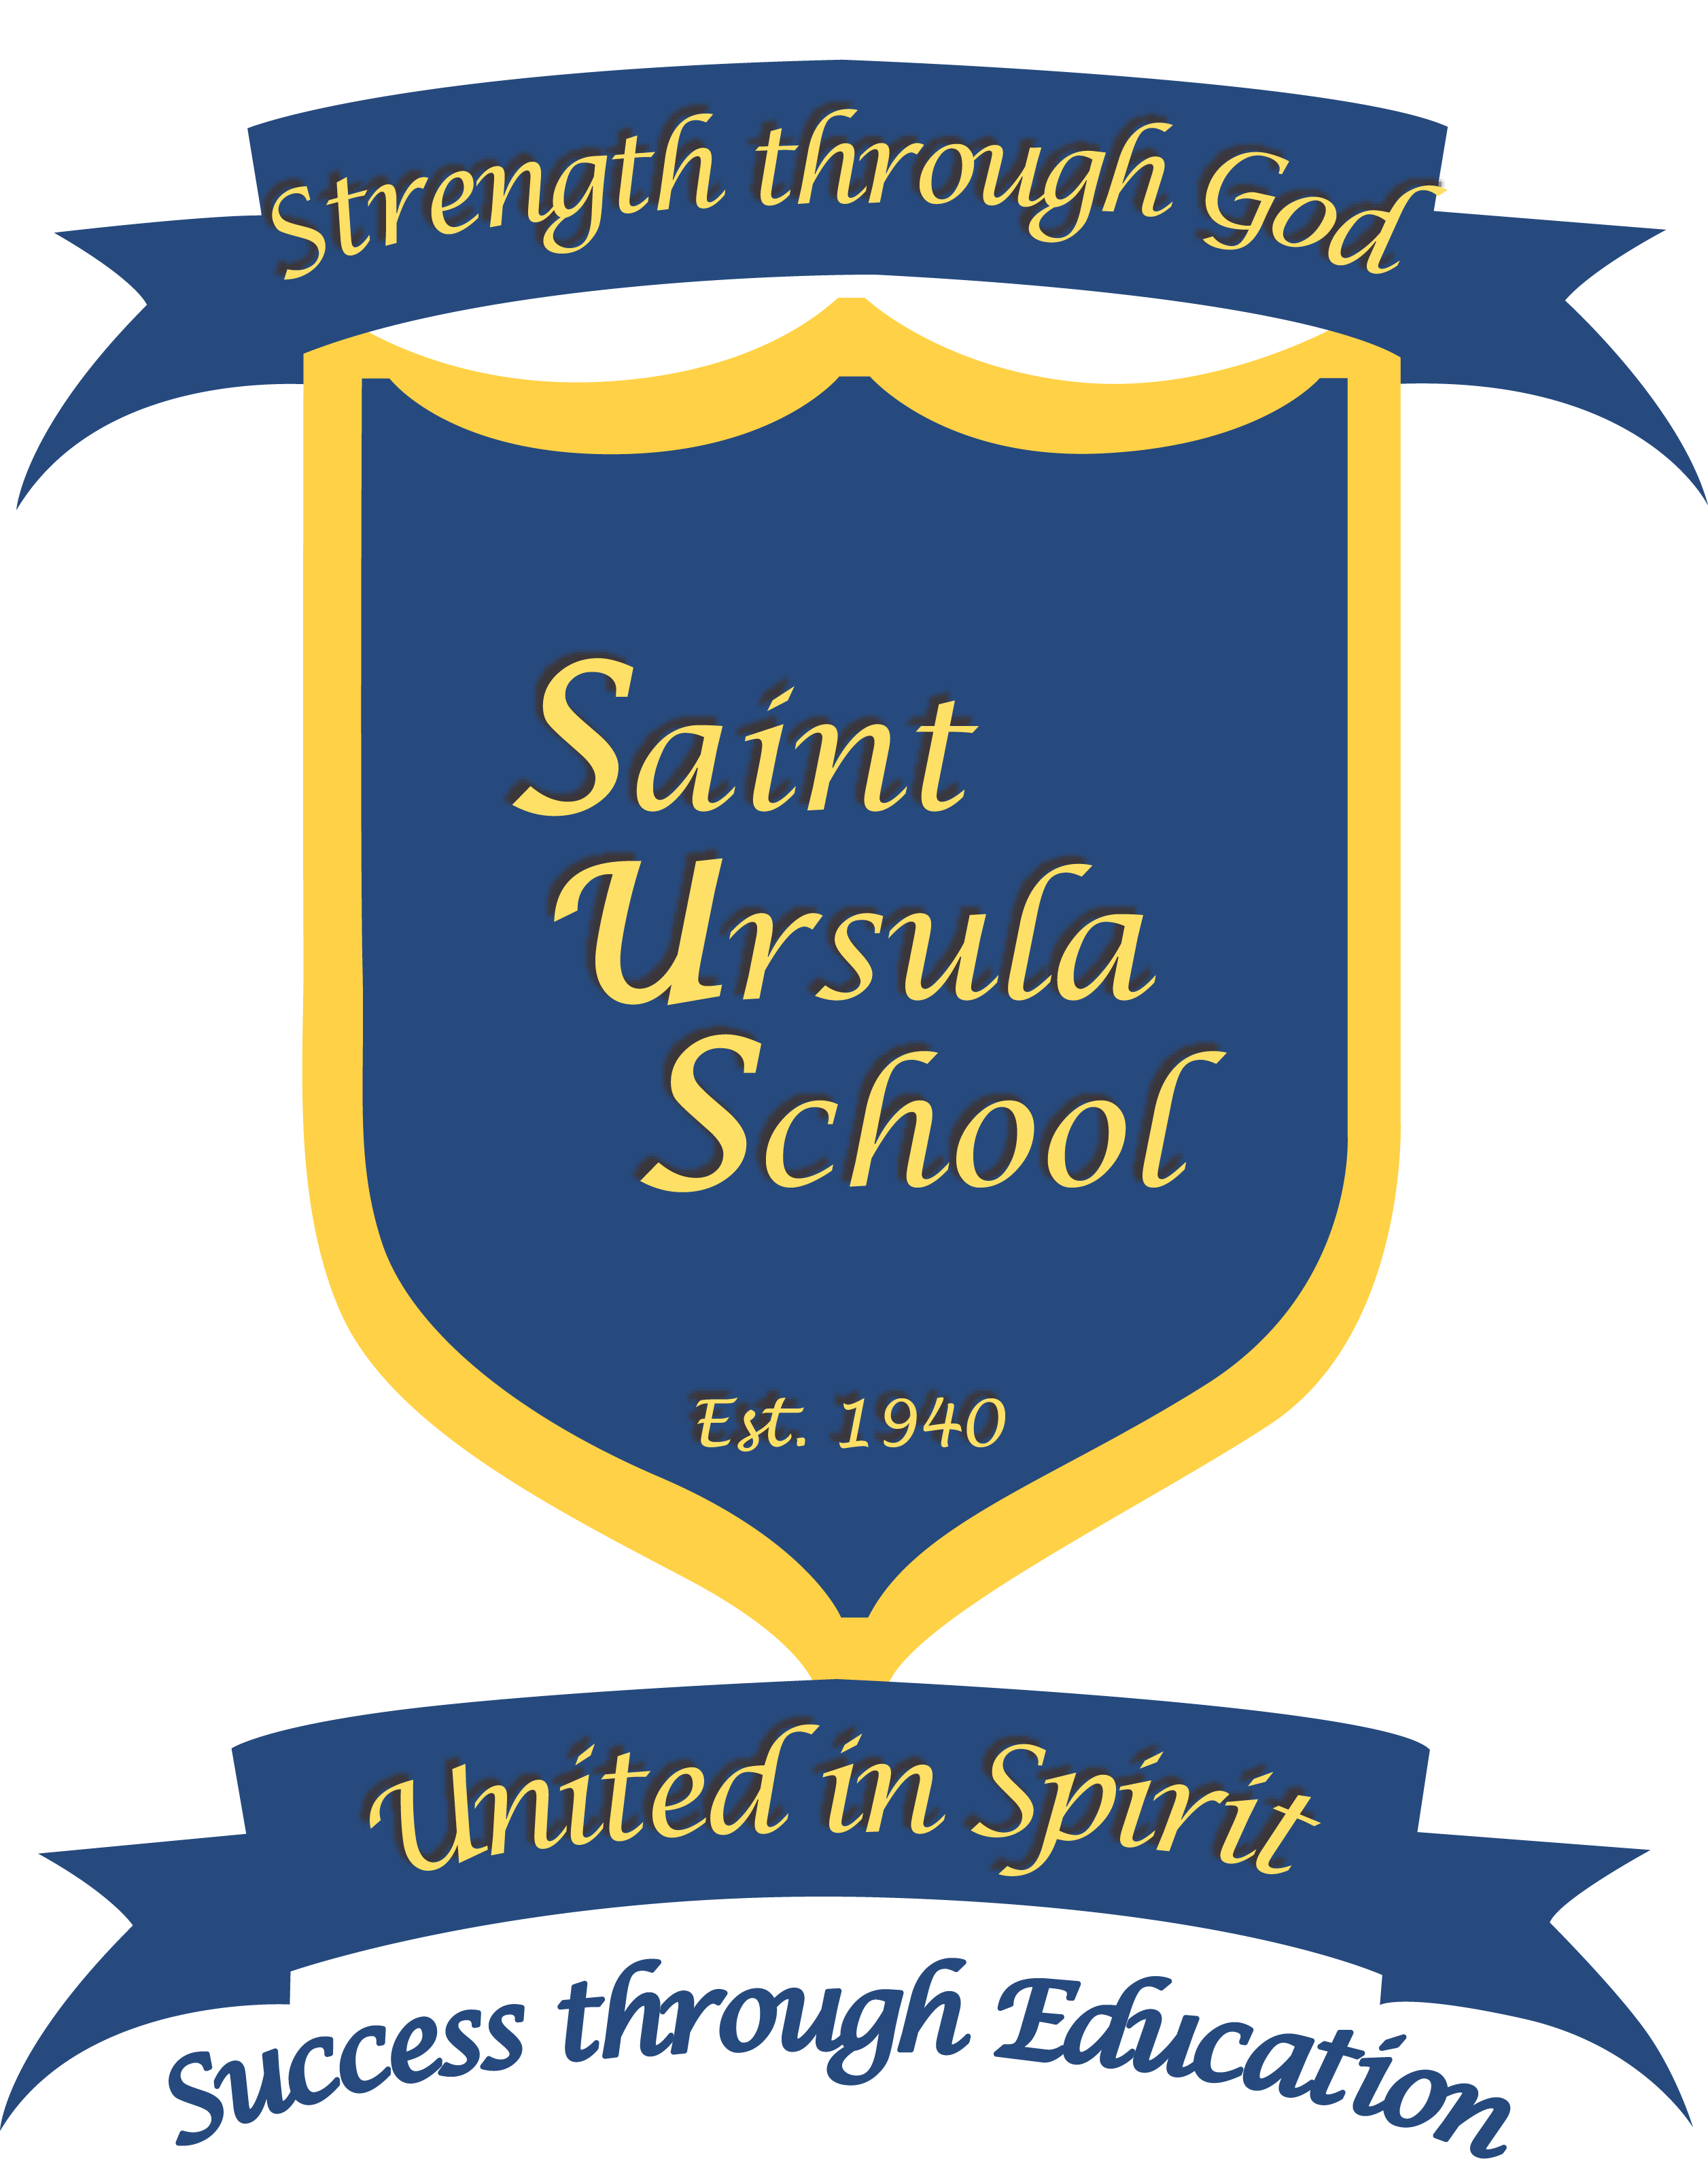 Saint Ursula School logo